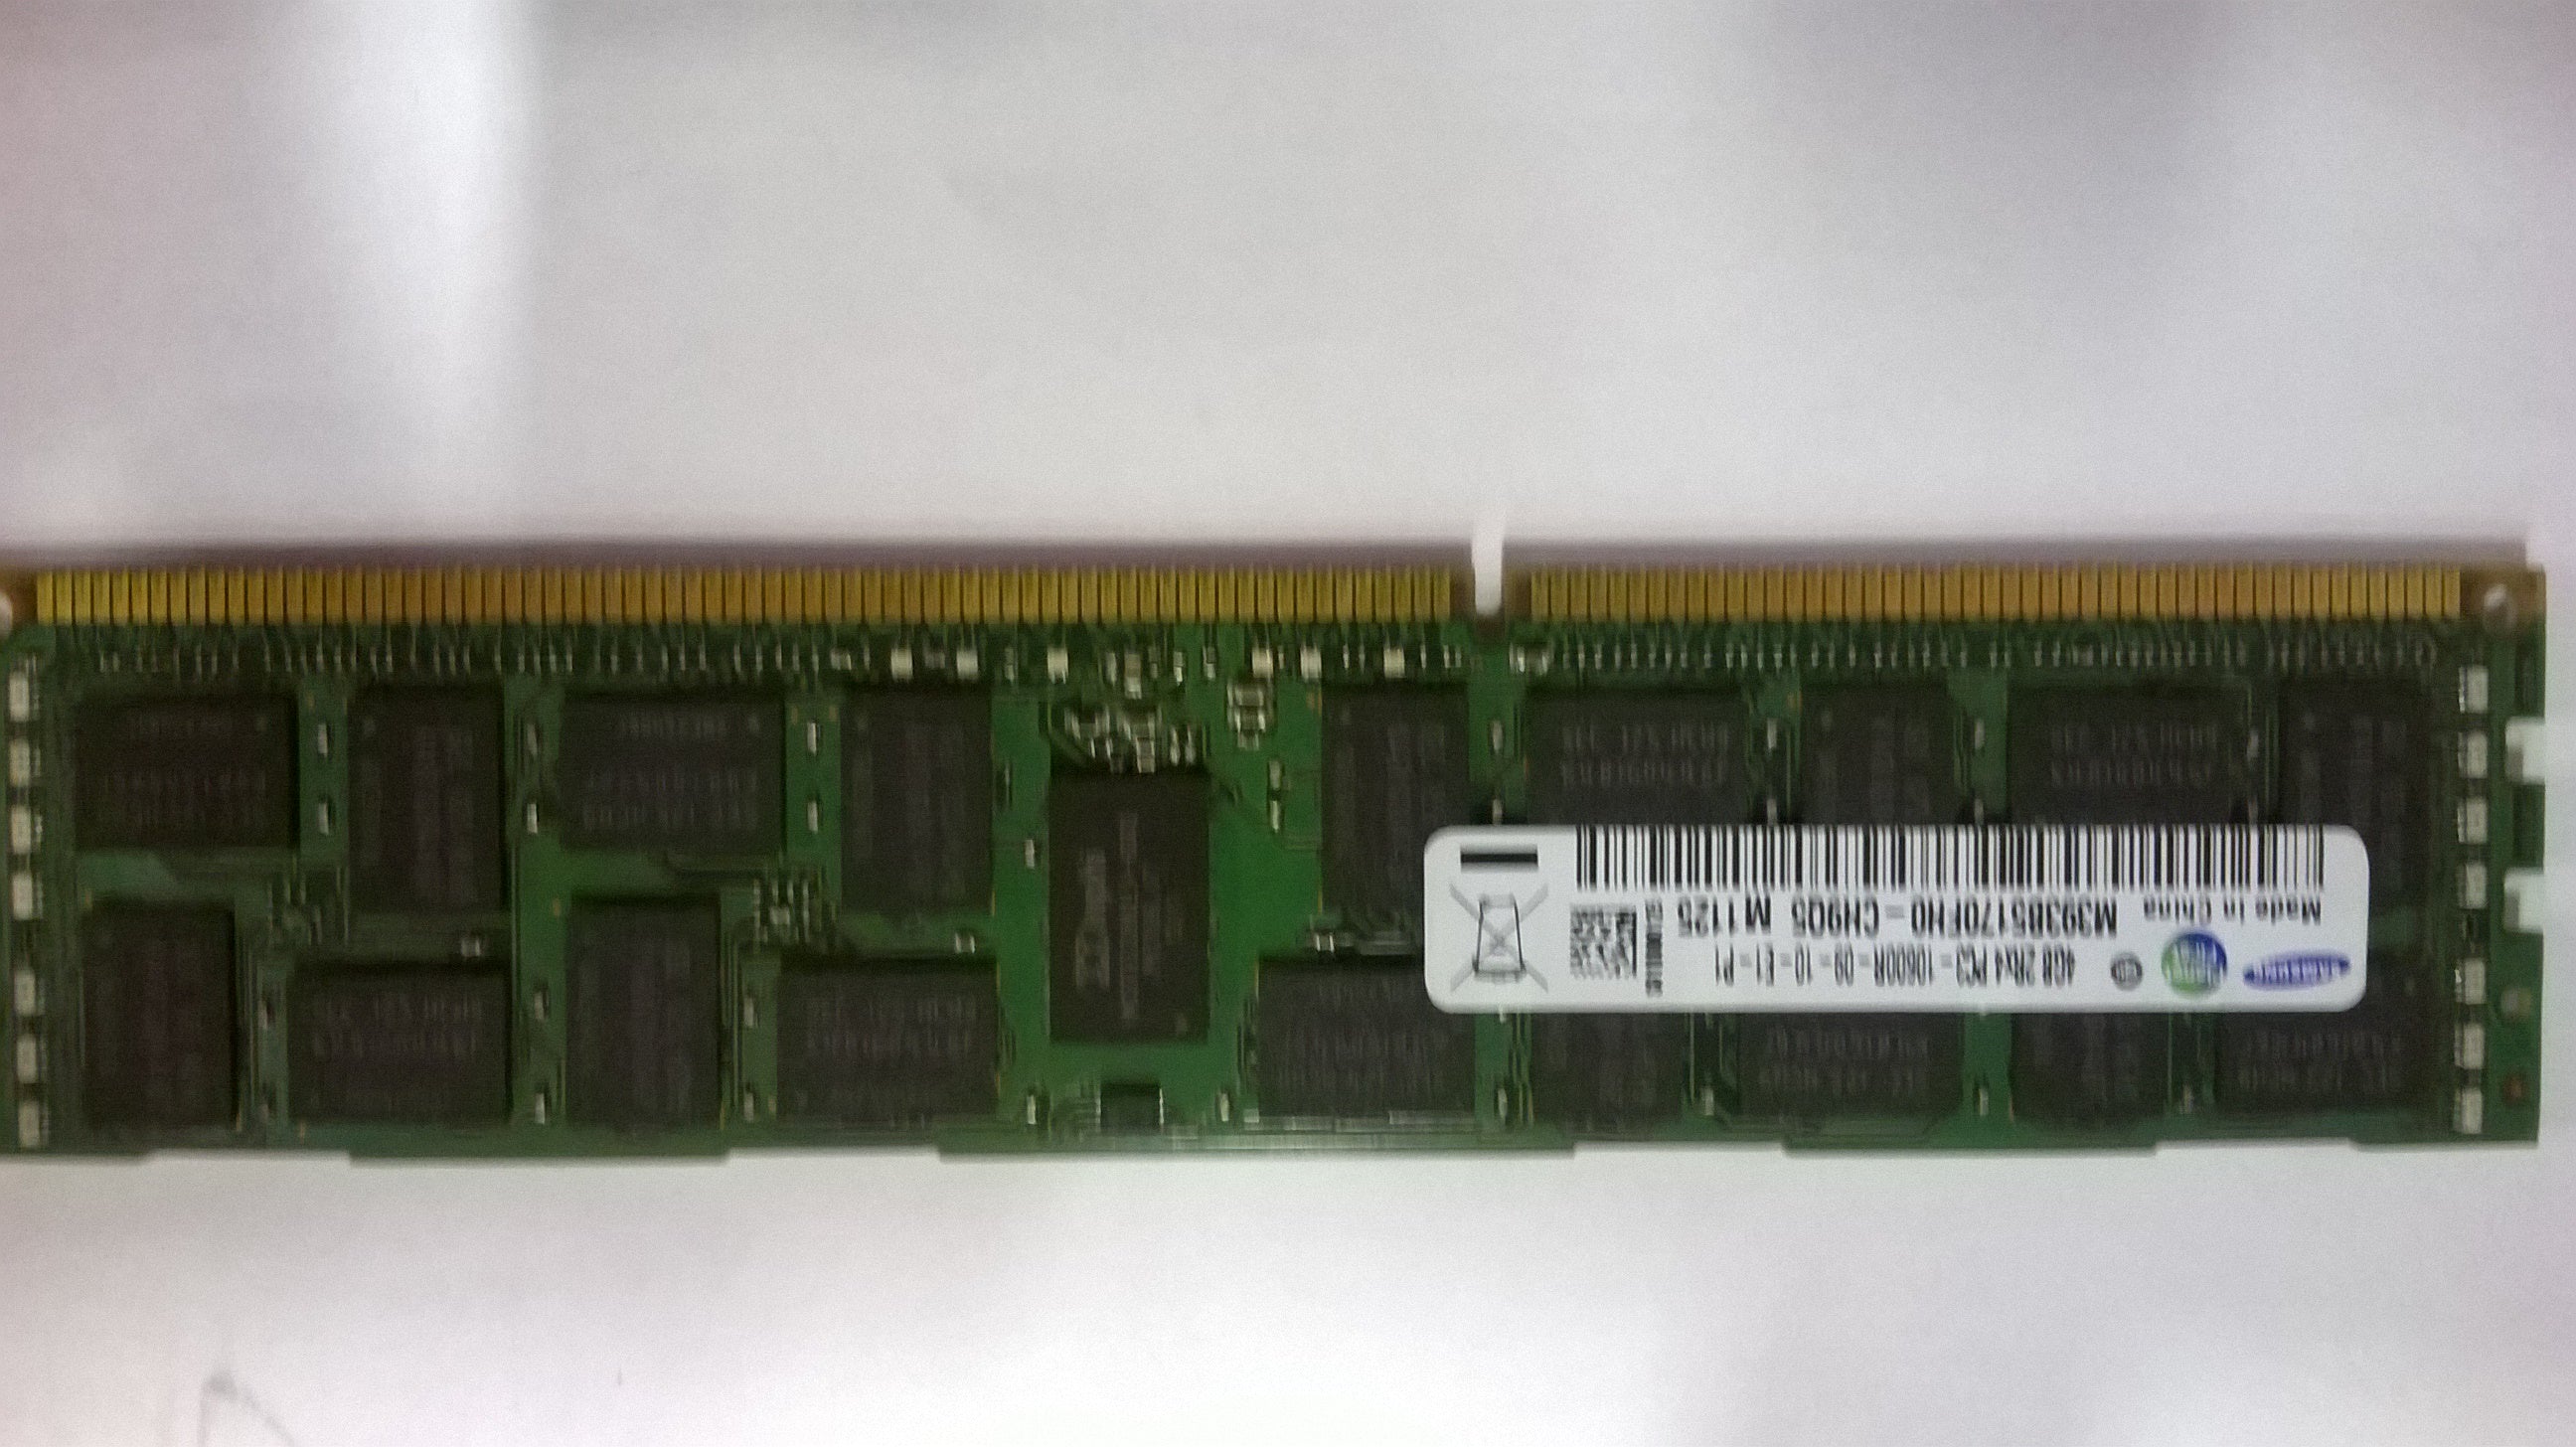 Samsung 4GB 240 PIN DDR3 SDRAM 1333 MHZ (M393B5170FH0 CH9Q5 PN 500203 061 USED)